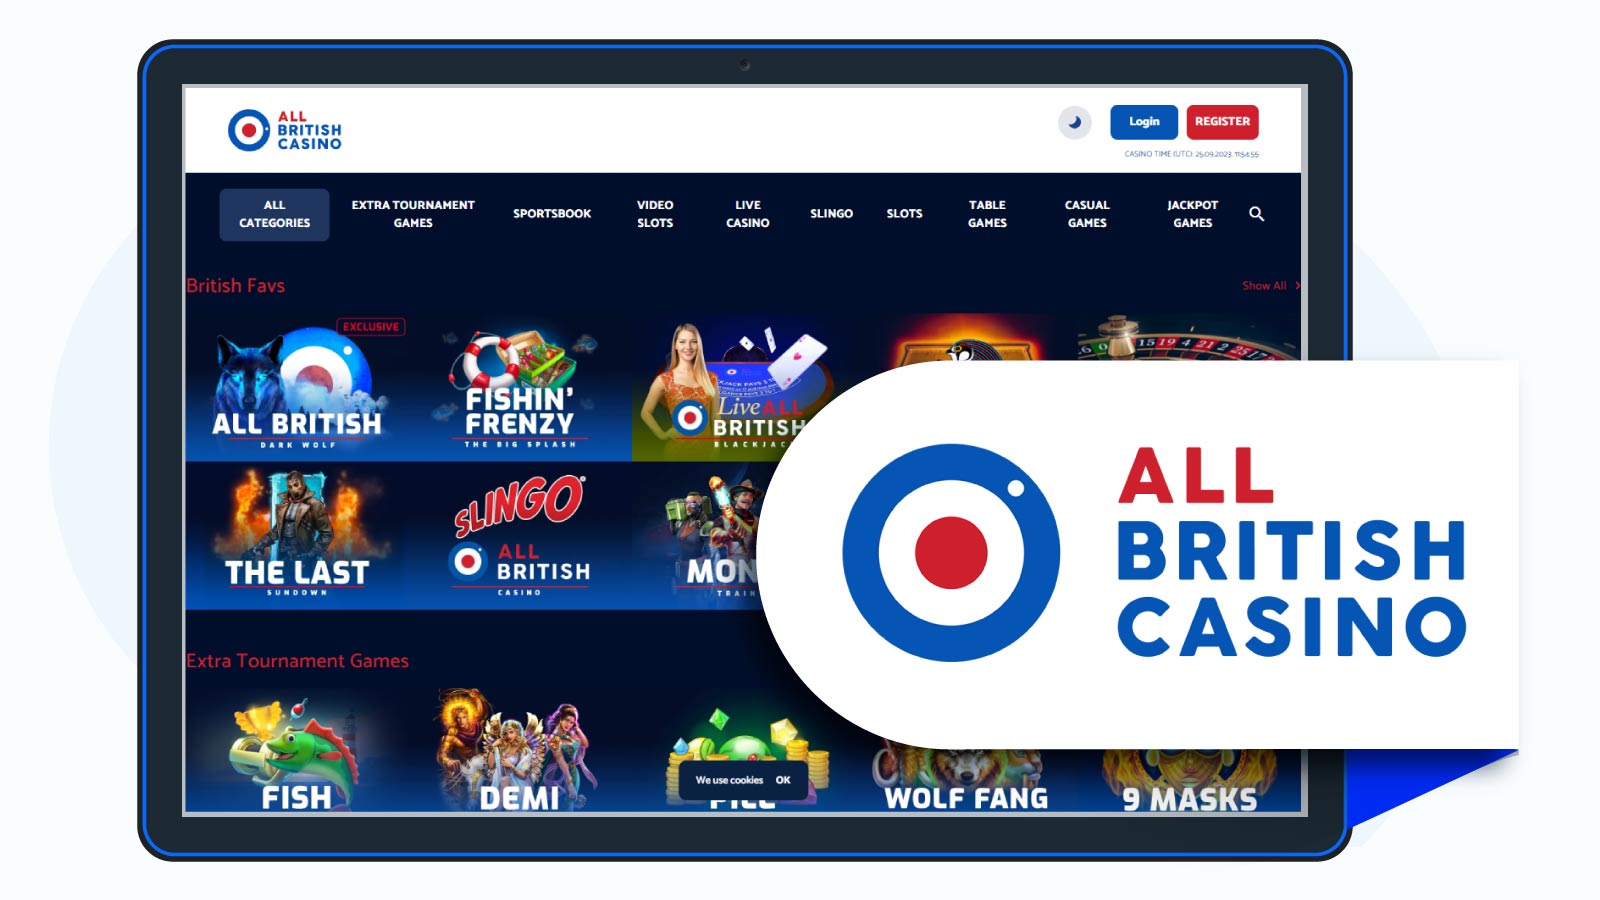 All British Casino Best Casino For Mobile Optimization